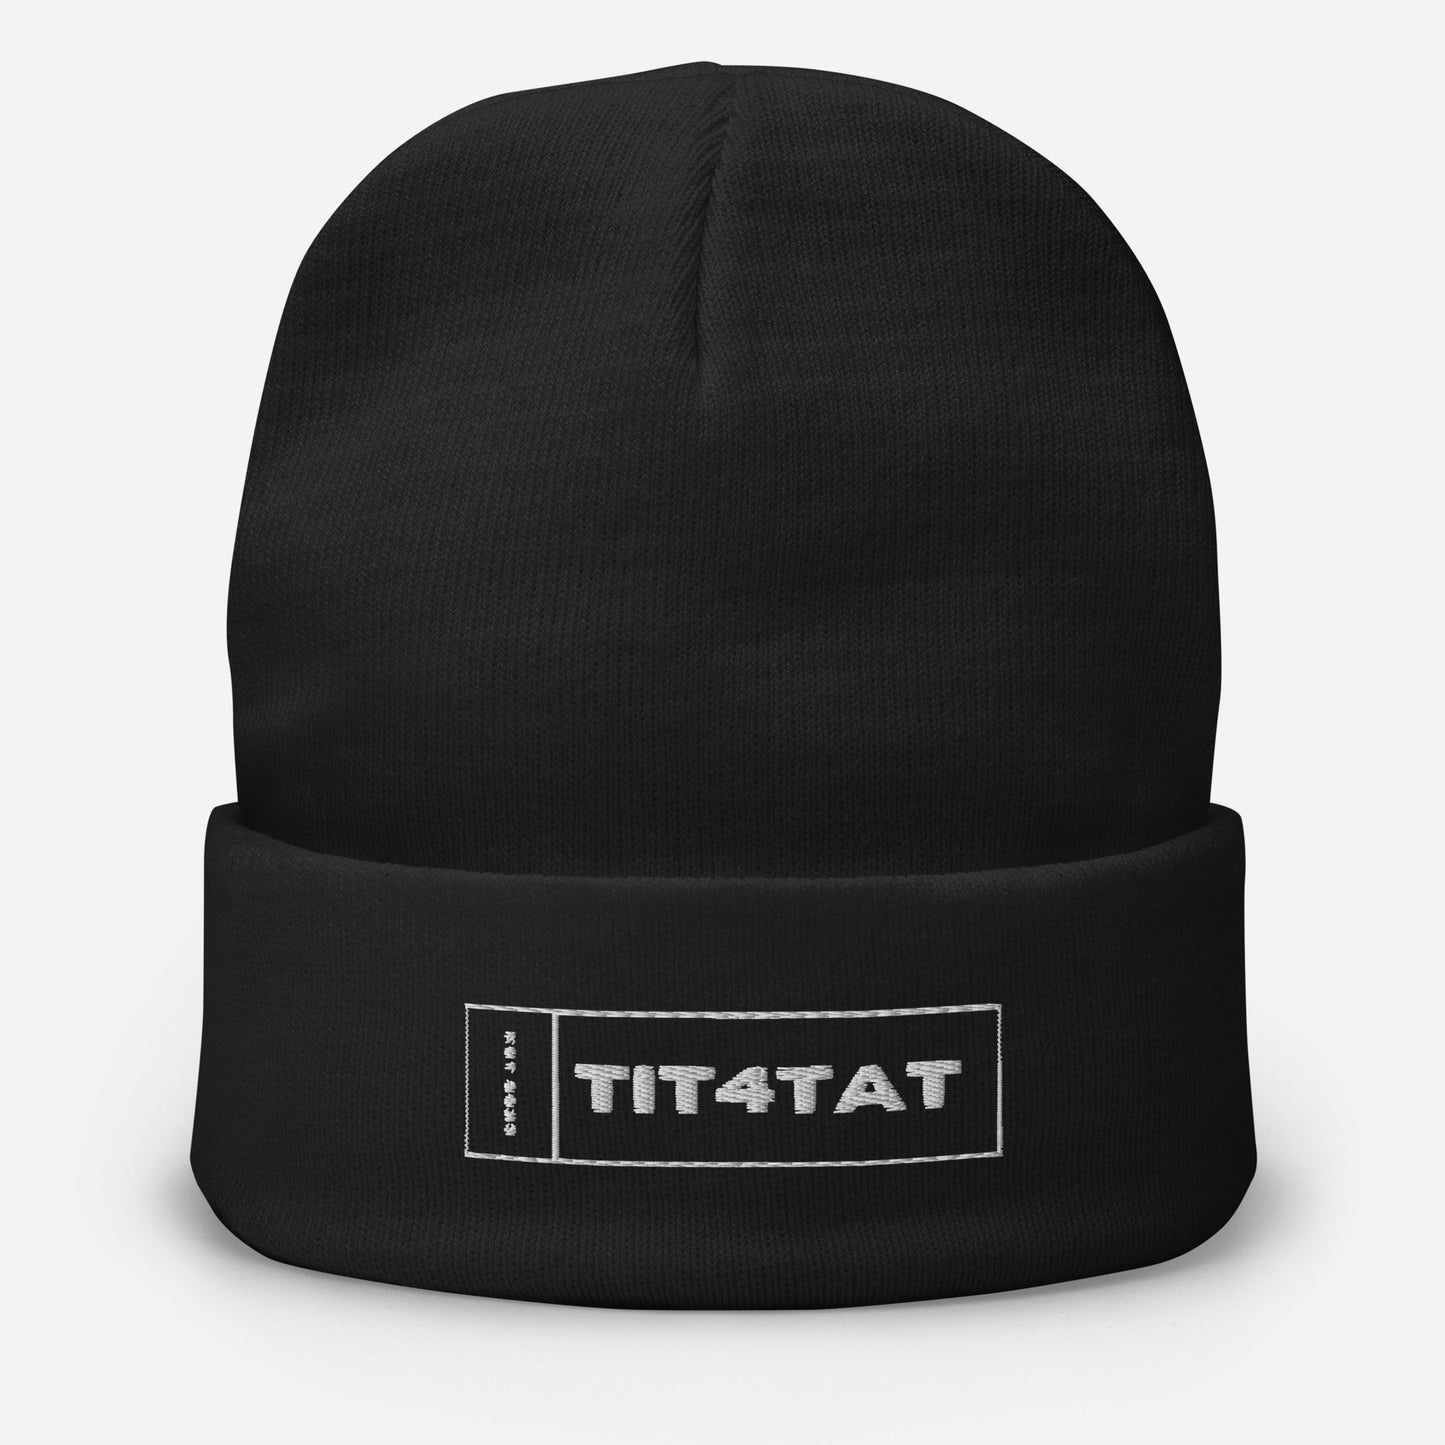 Tit4Tat - Bonnet brodé